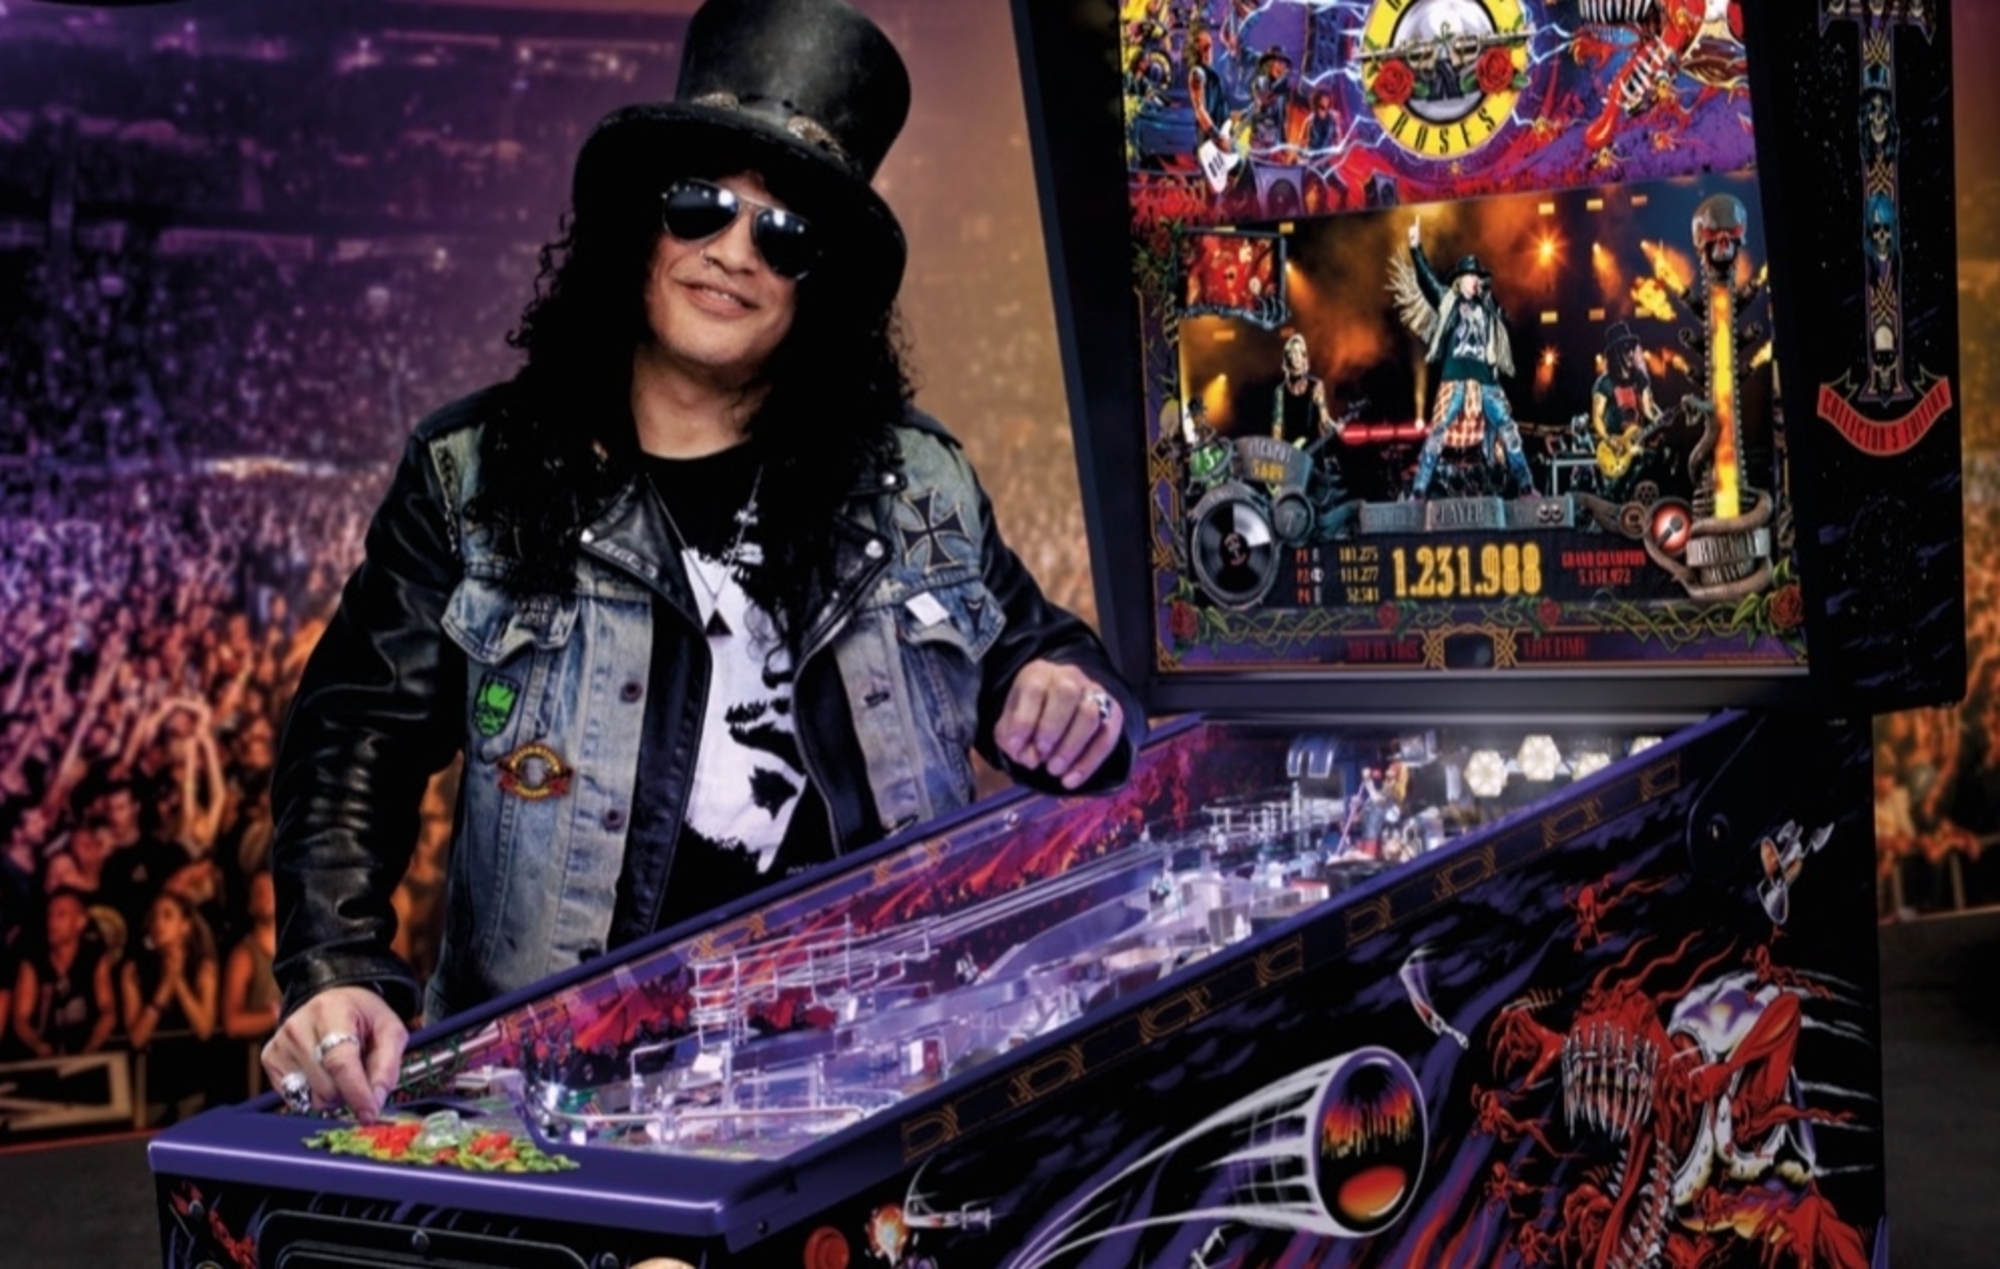 Guns N' Roses lanza su propia máquina de pinball "No en esta vida"...